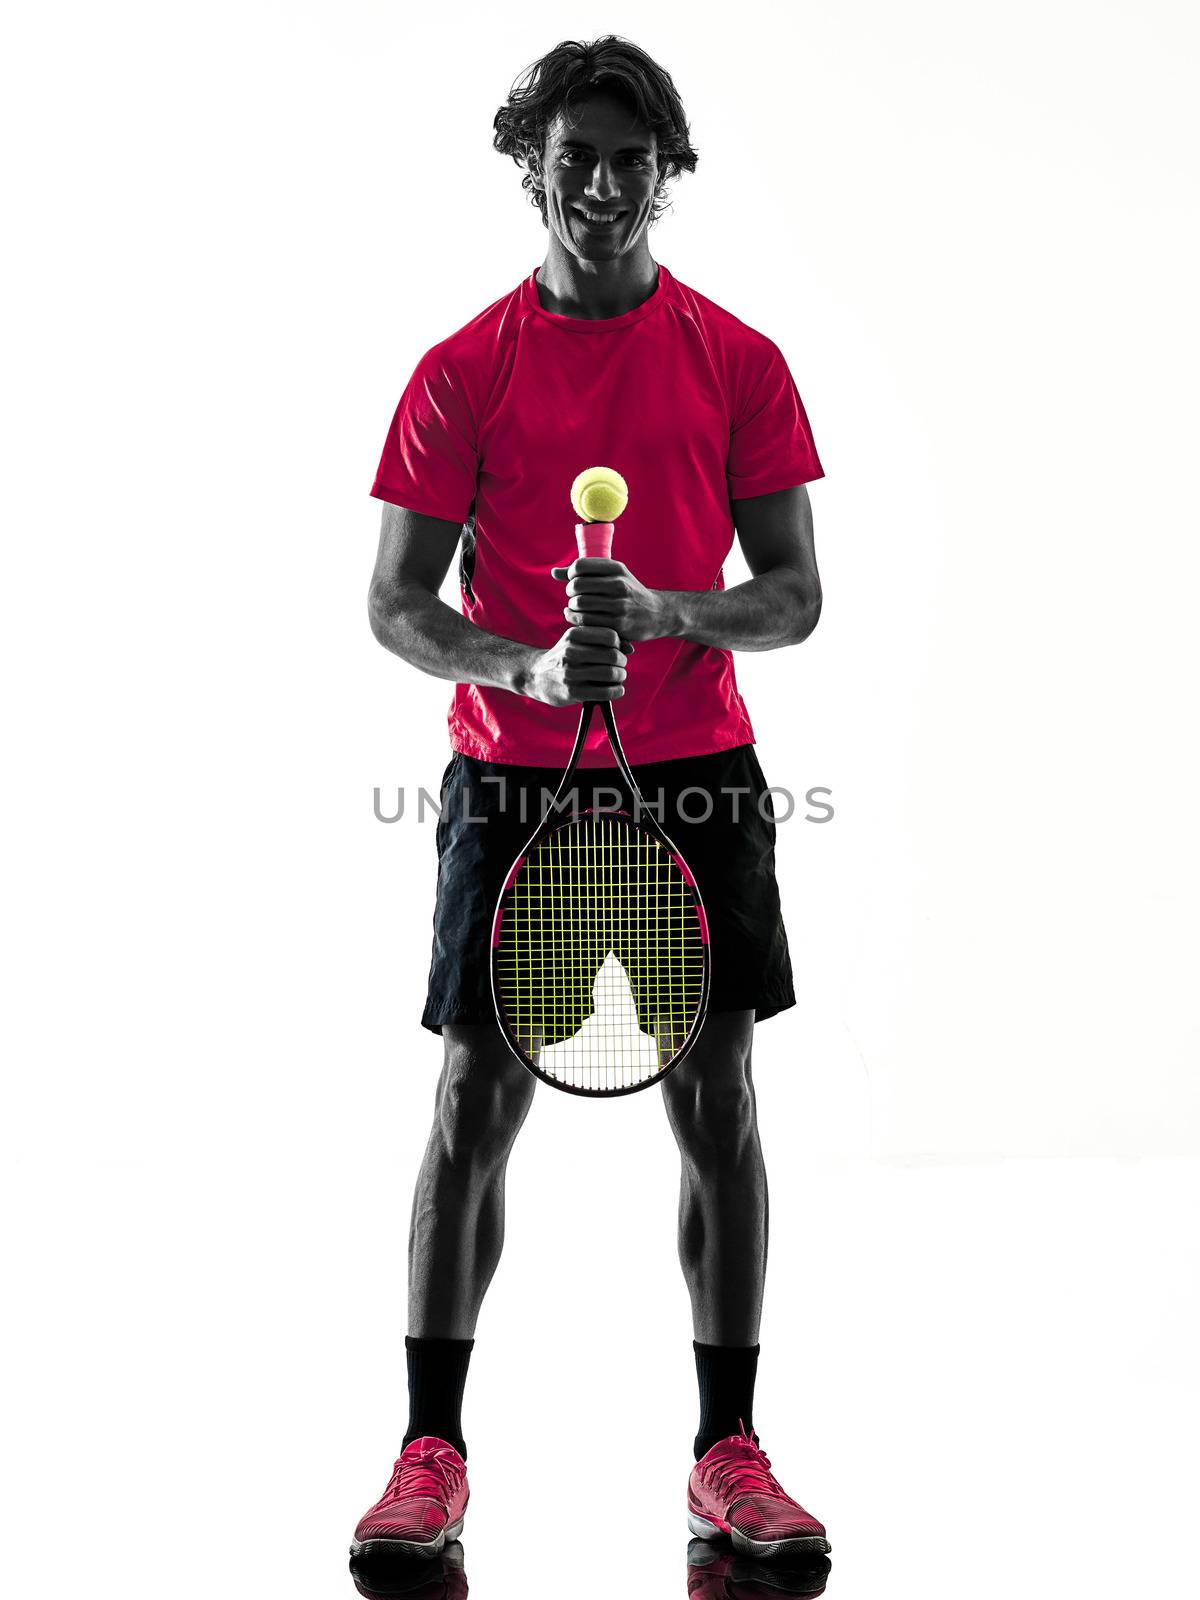 one caucasian hispanic tennis player man in studio silhouette isolated on white background